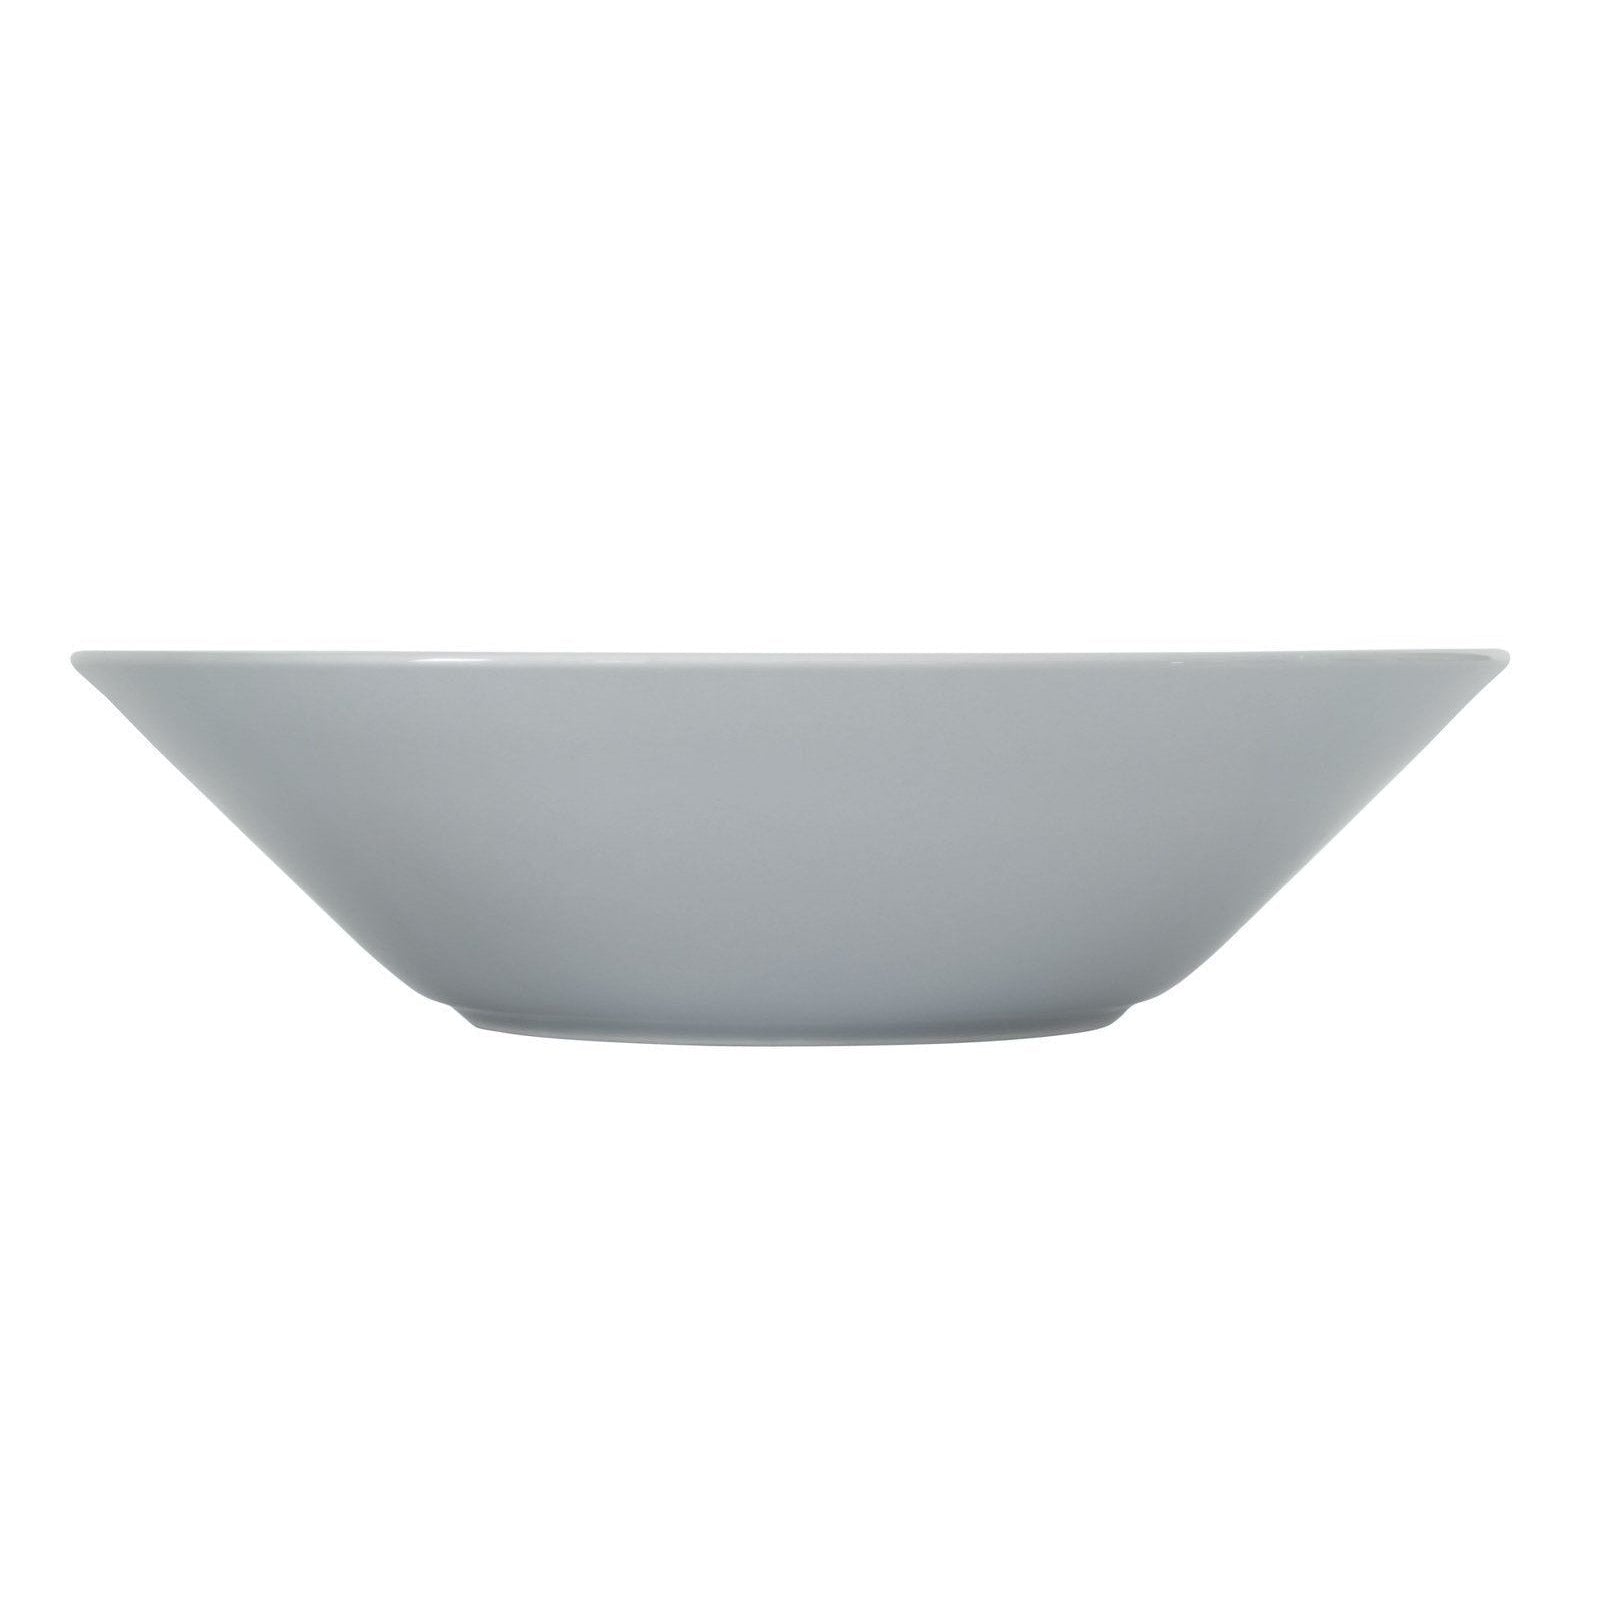 Iittala teema piastra profonda perla grigio, 21 cm